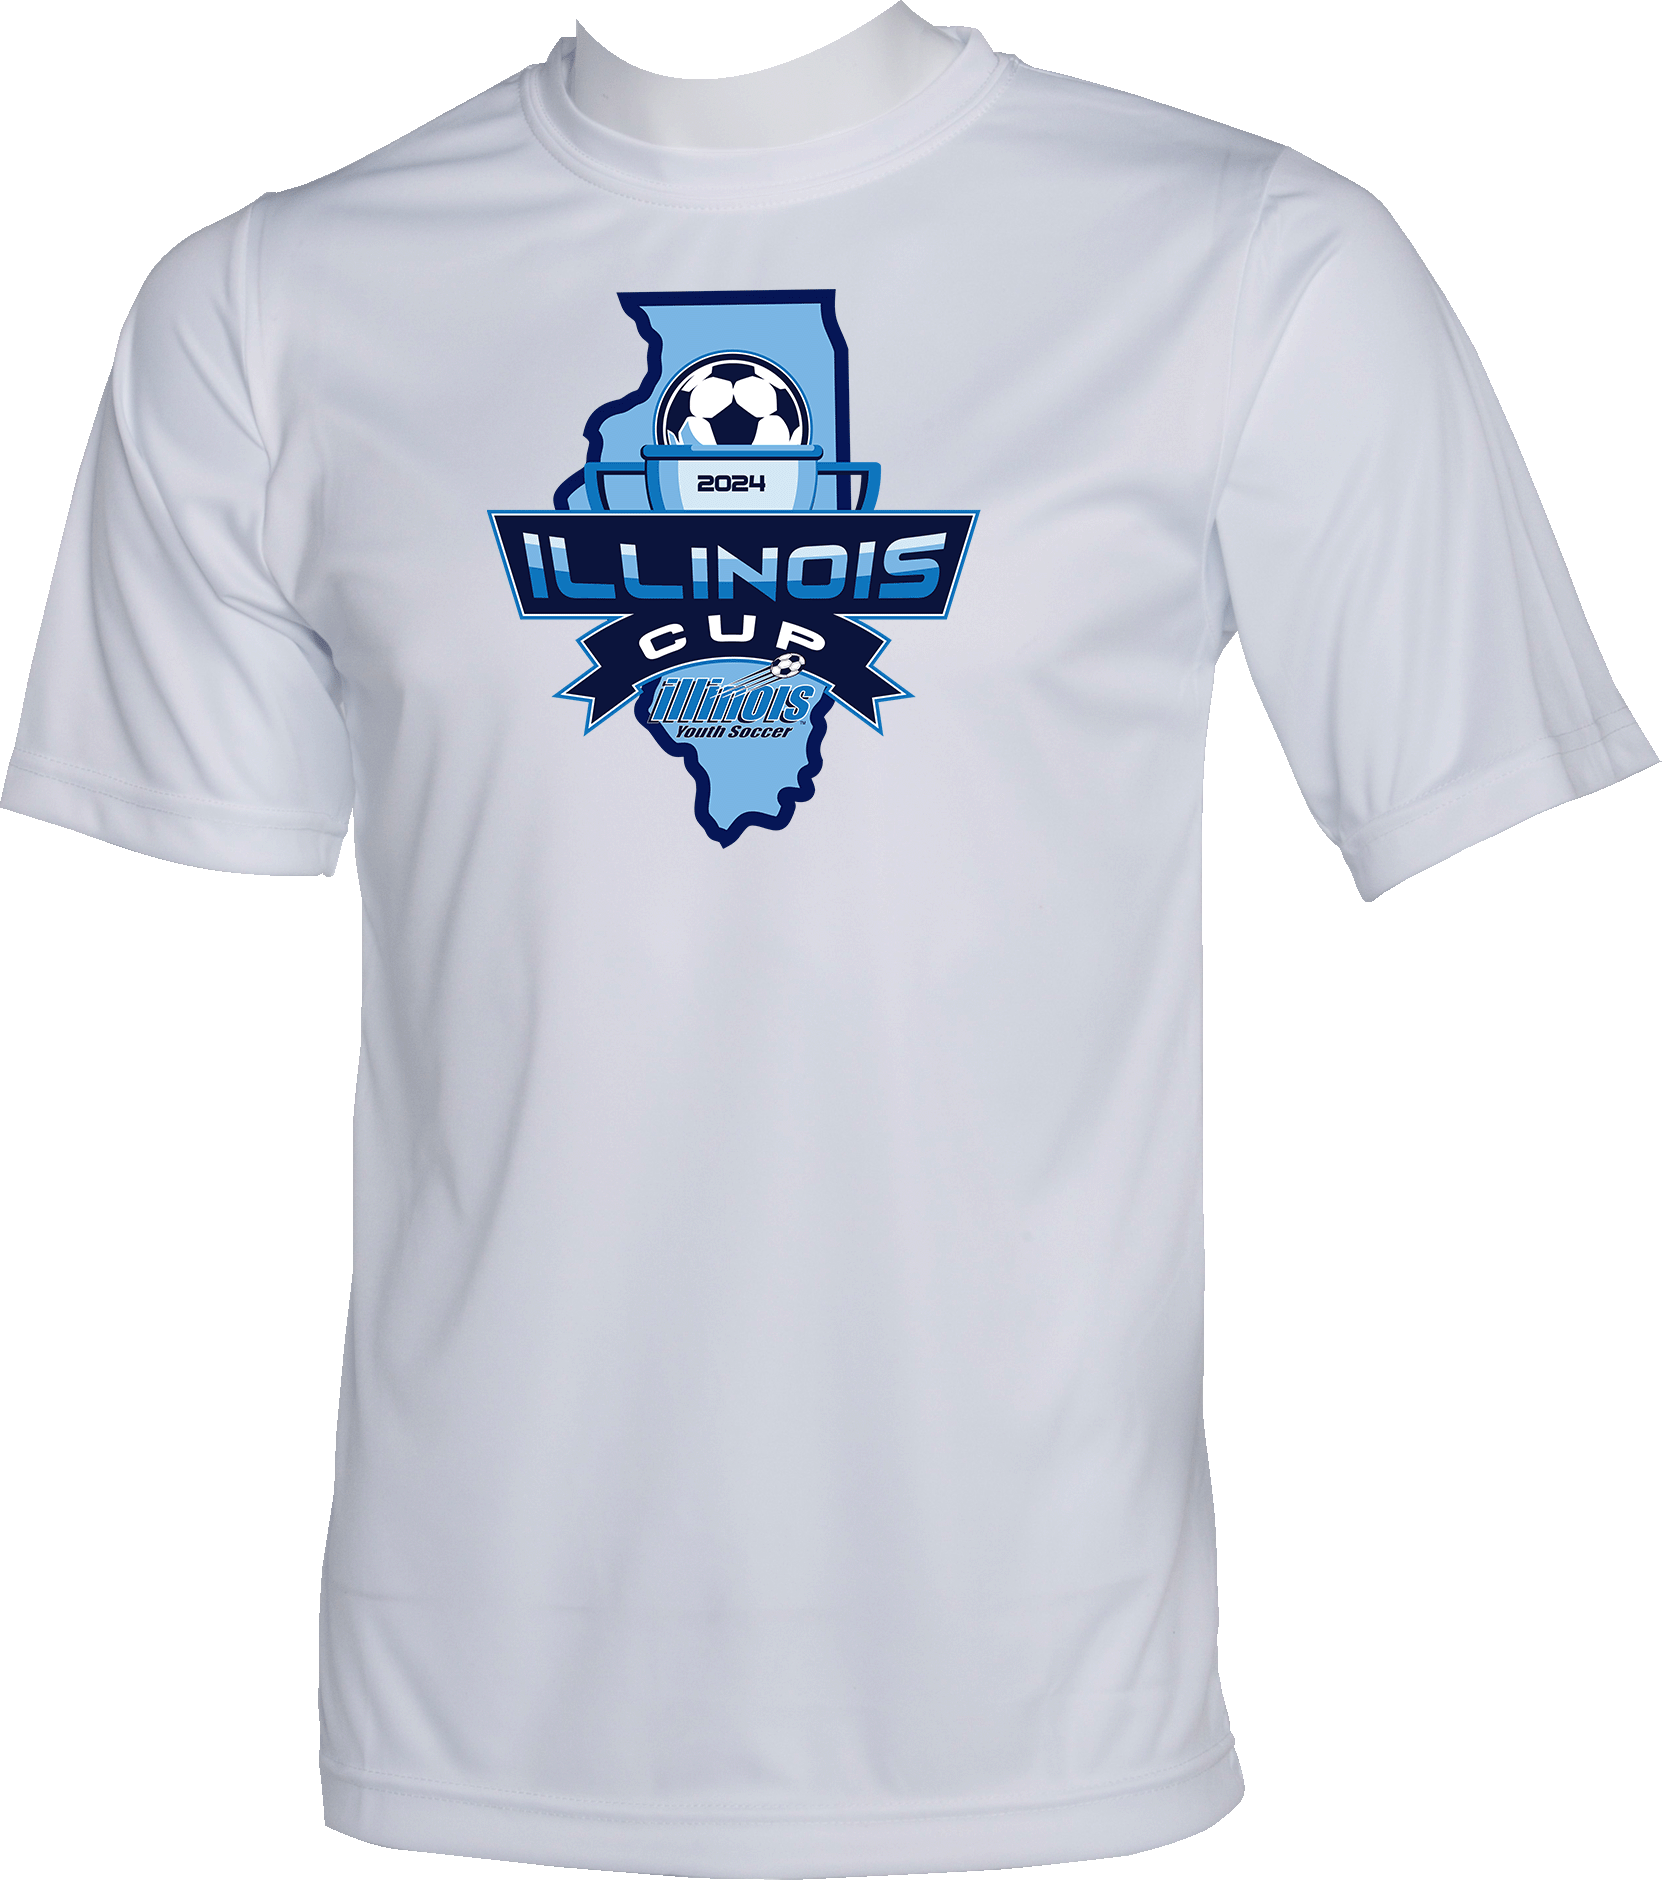 Performance Shirts - 2024 USYS Illinois Cup